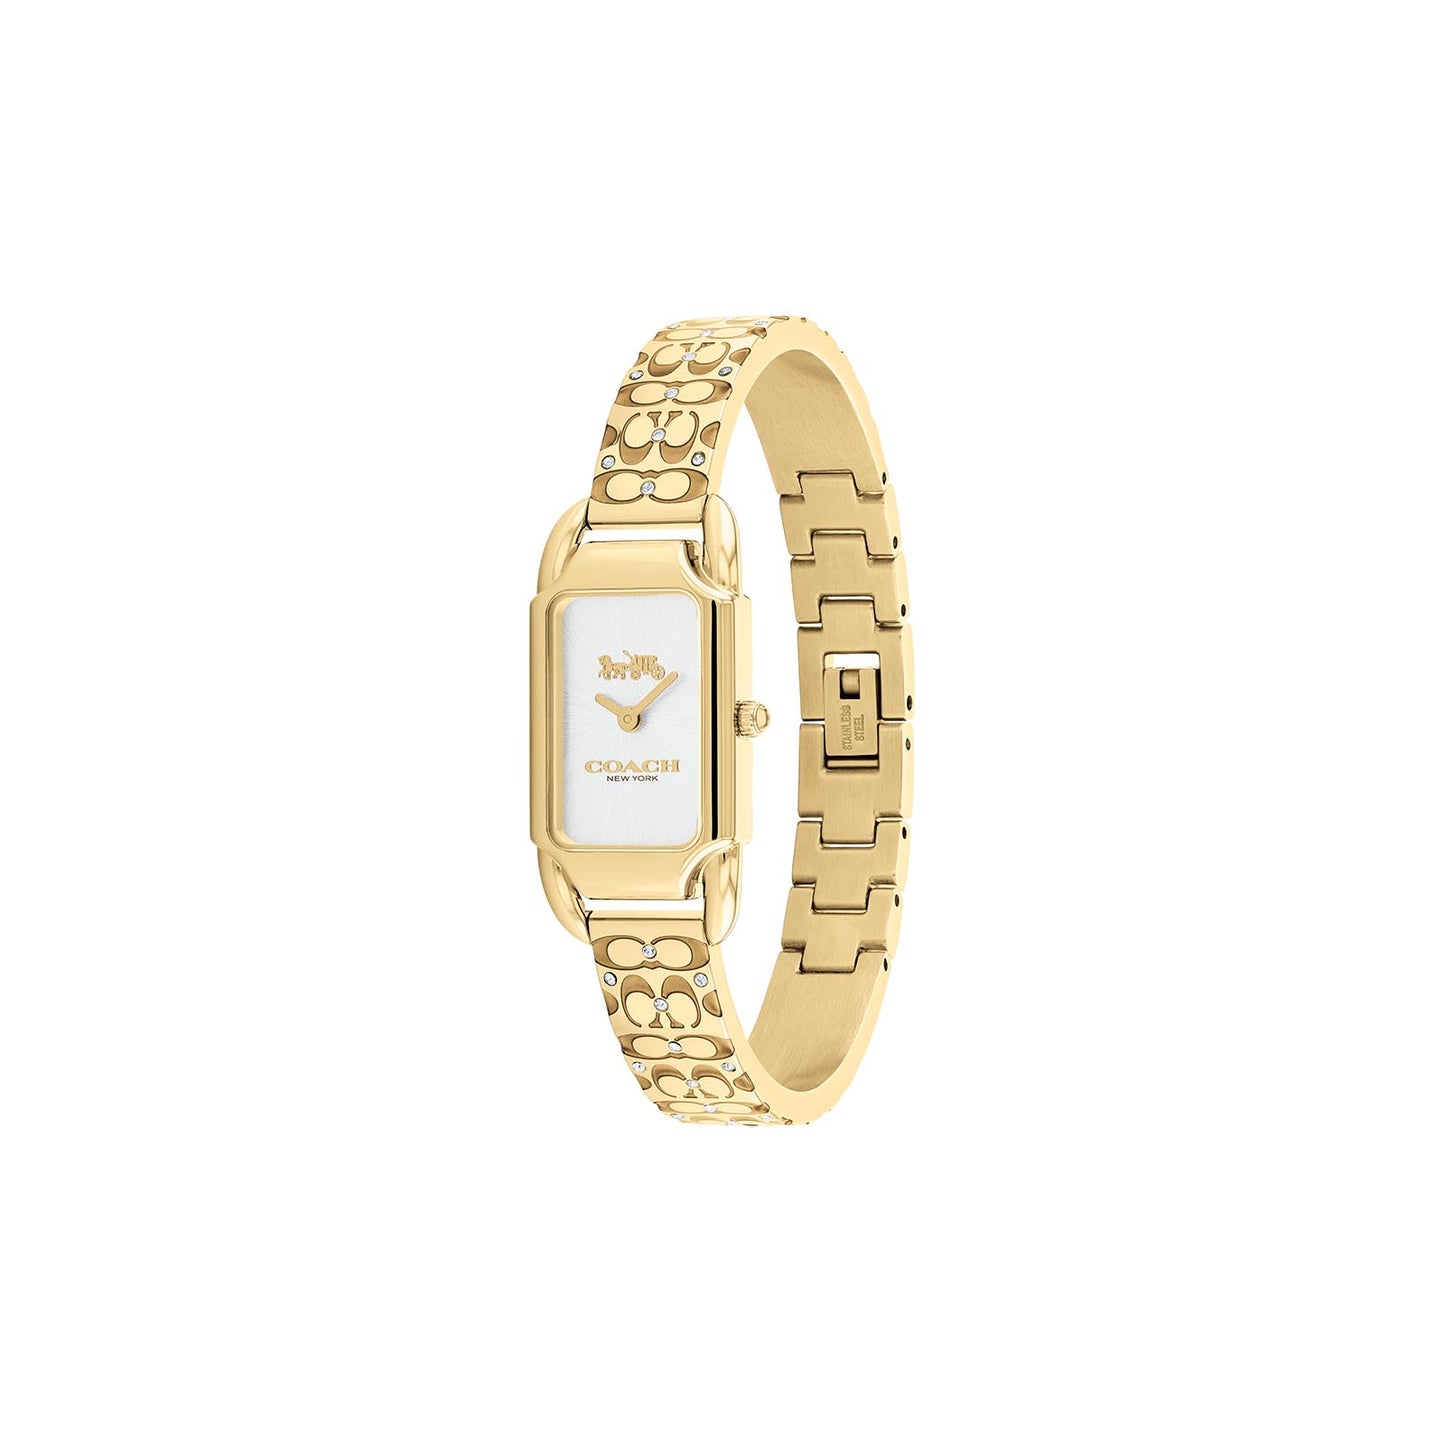 Coach 14504196 Women's Ionic Thin Gold Plated Steel Bangle Watch